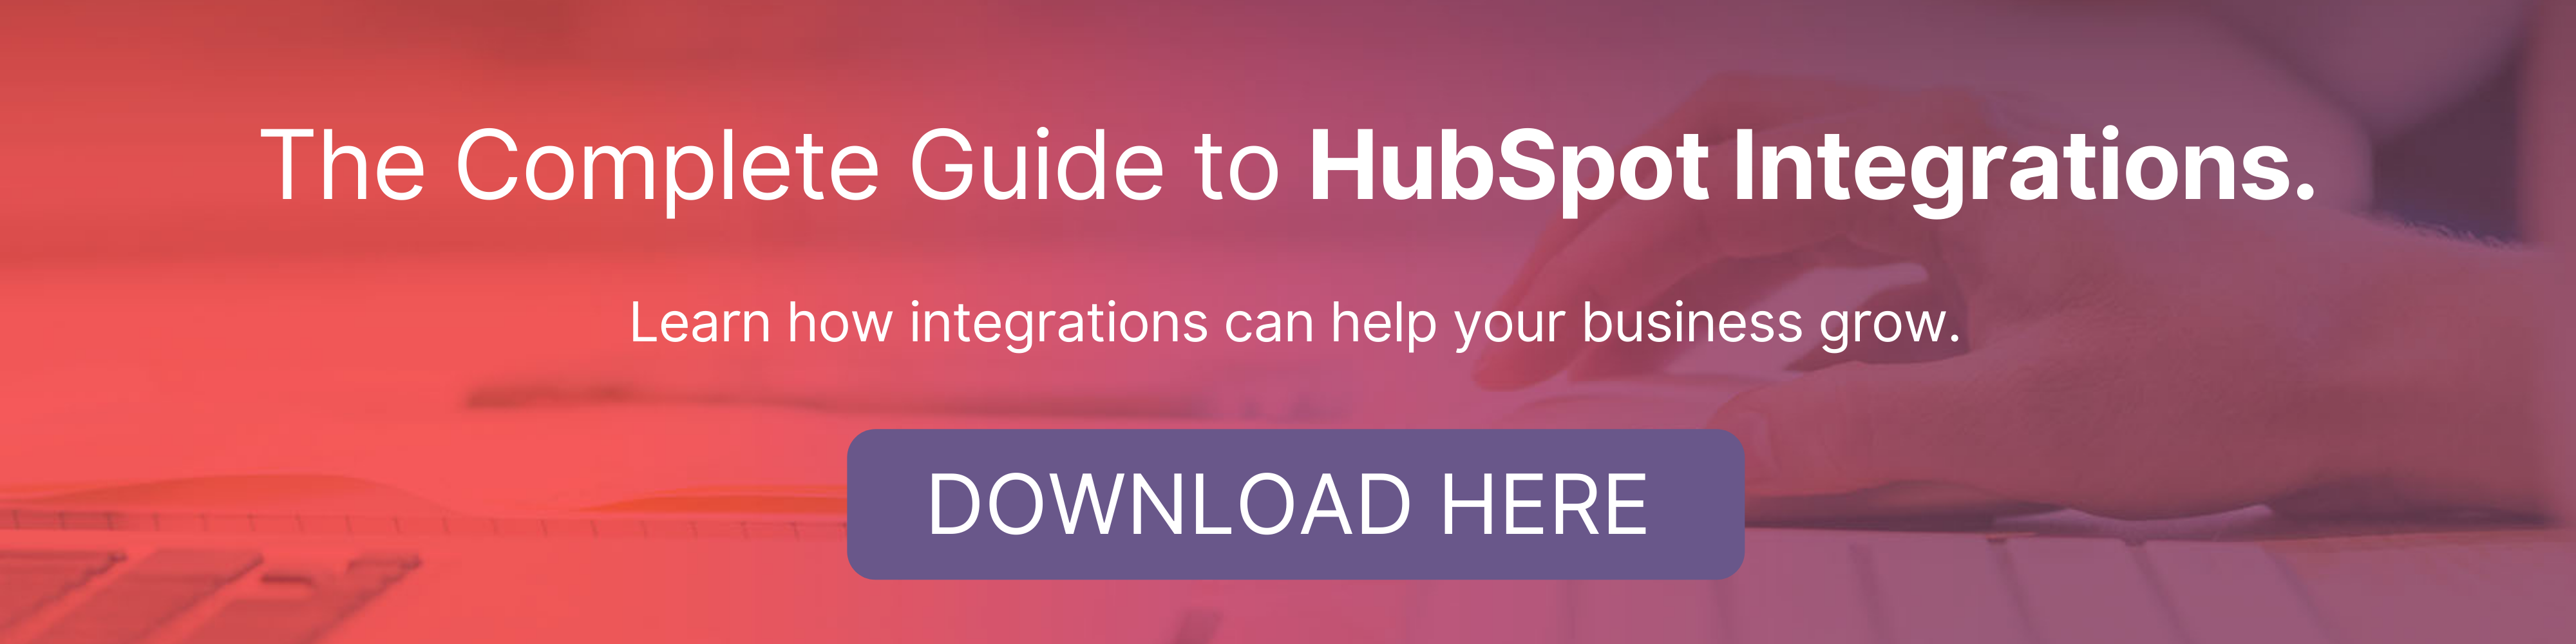 Hubspot integrations